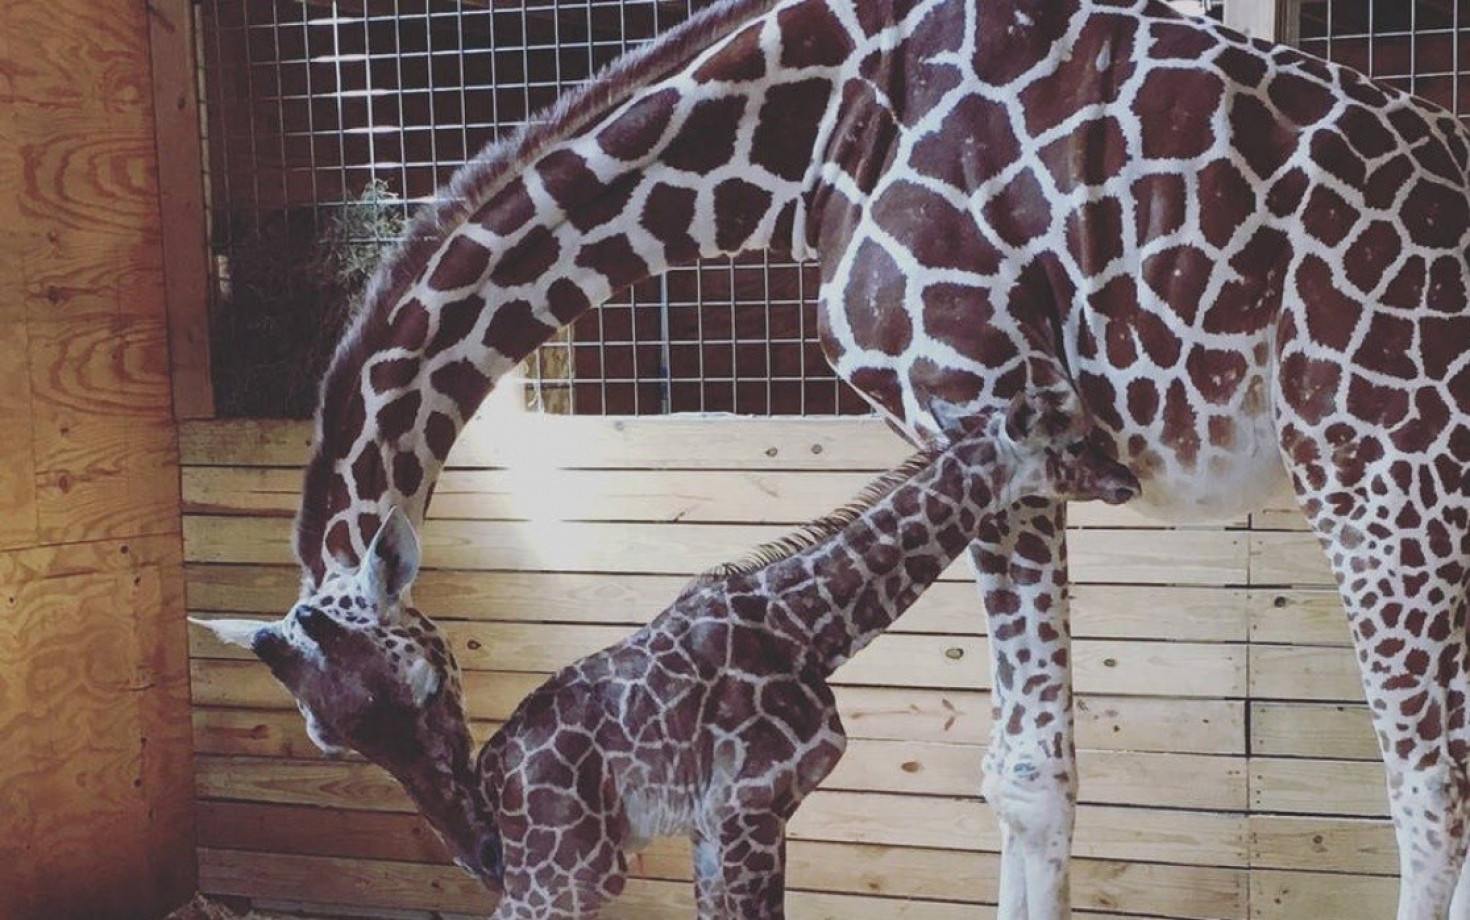 Animal Adventure`s `Giraffe Cam` received more than 230 million total views